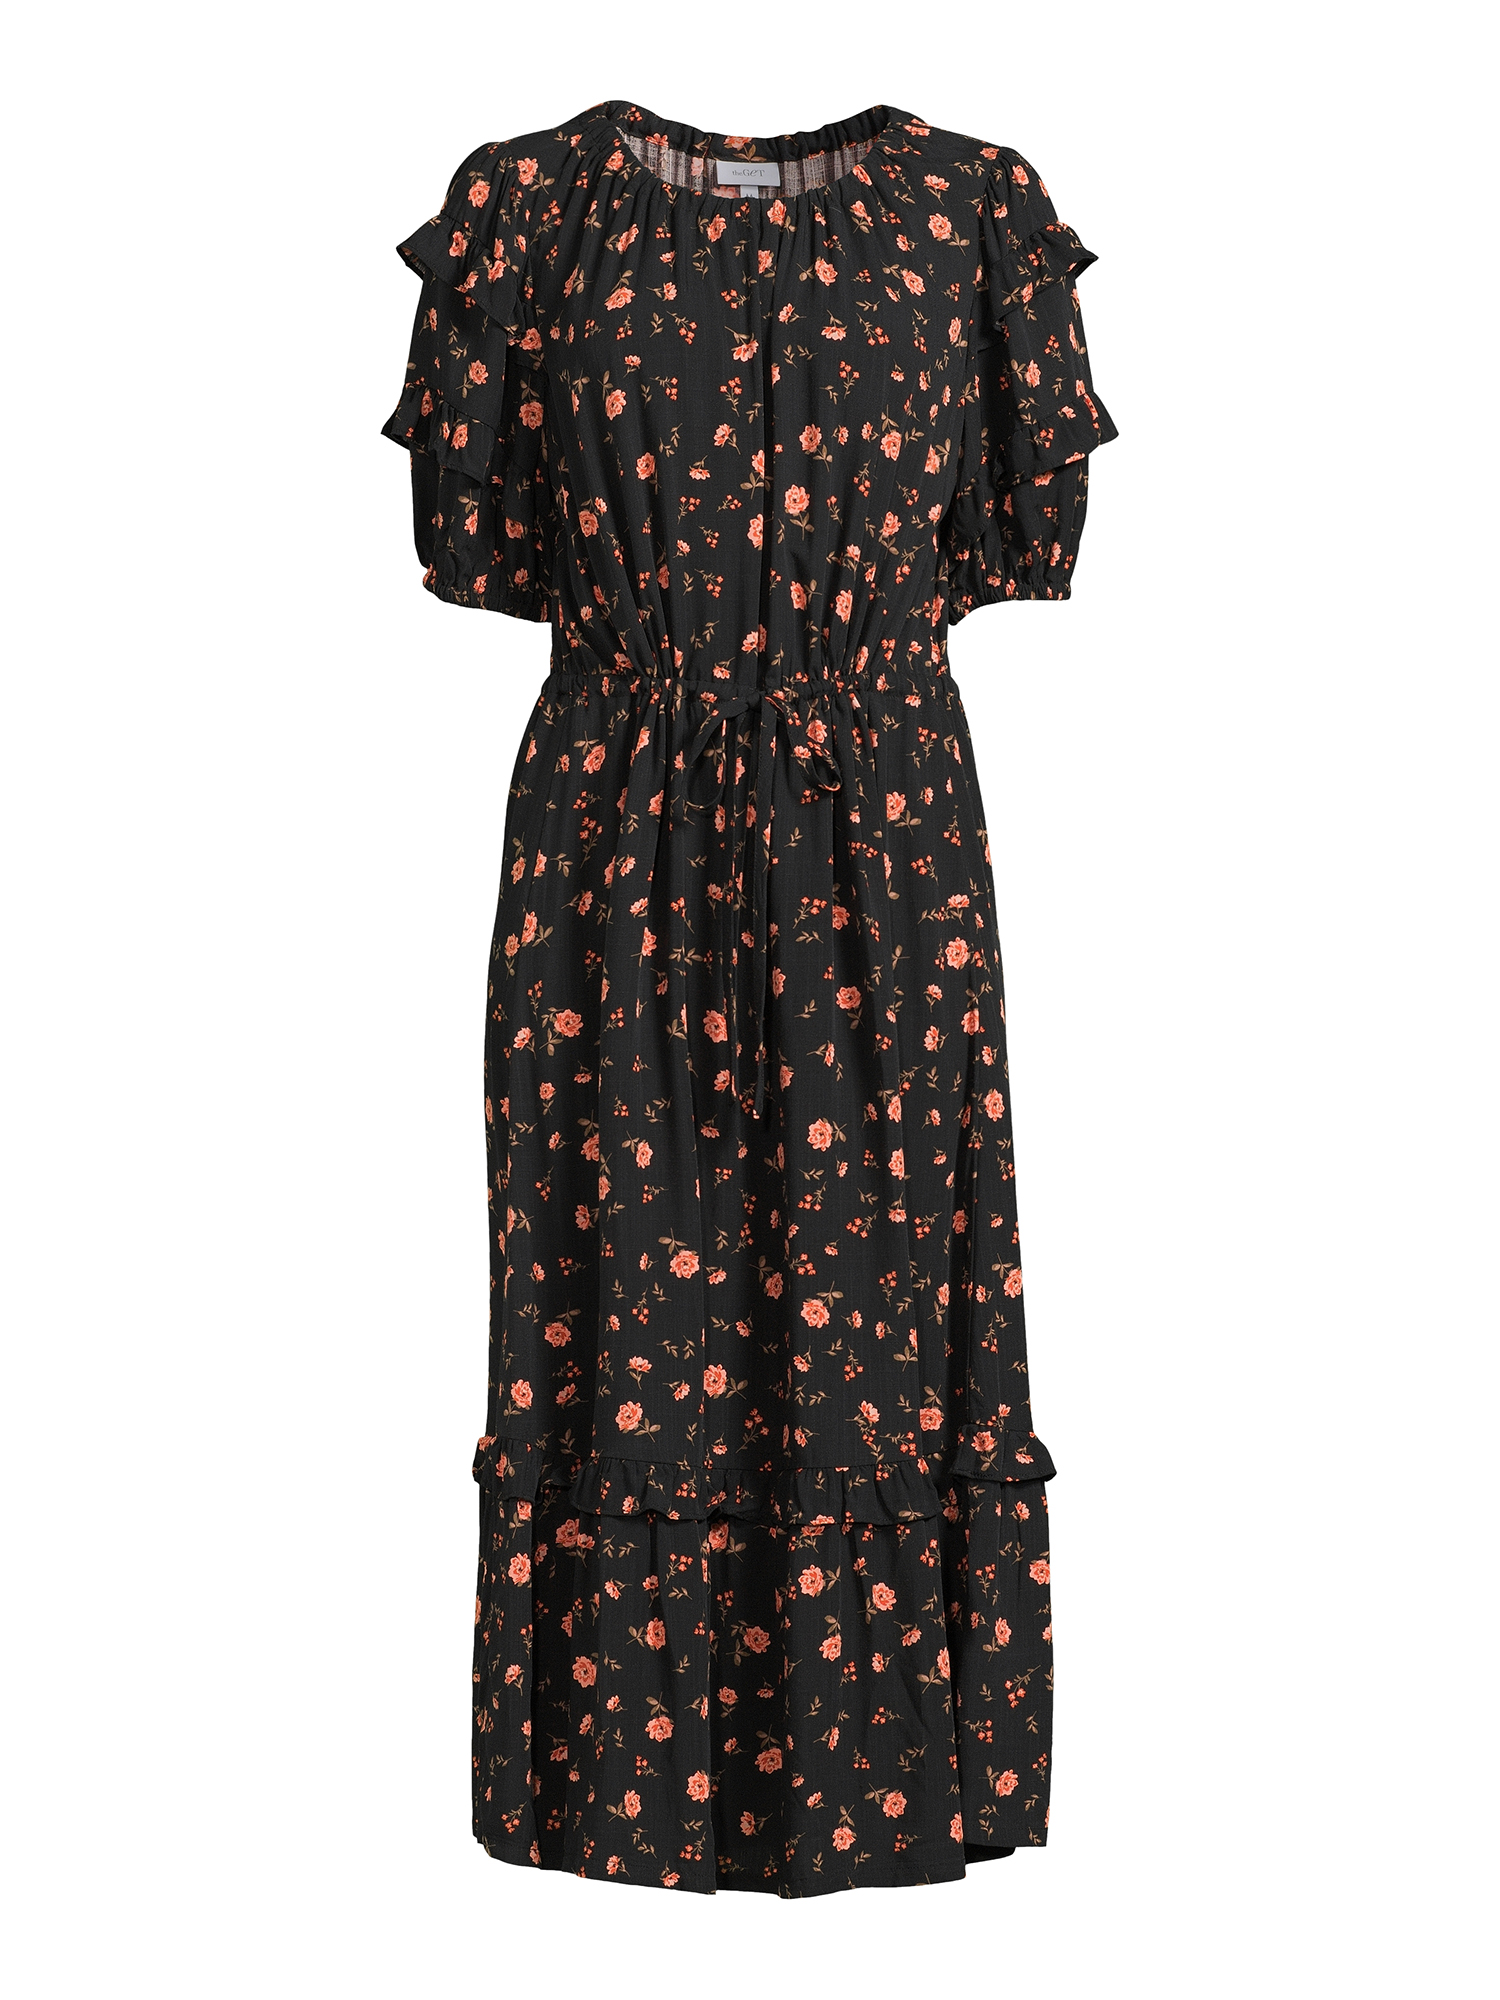 The Get Women's Tiered Ruffle Prairie Midi Dress - image 5 of 5